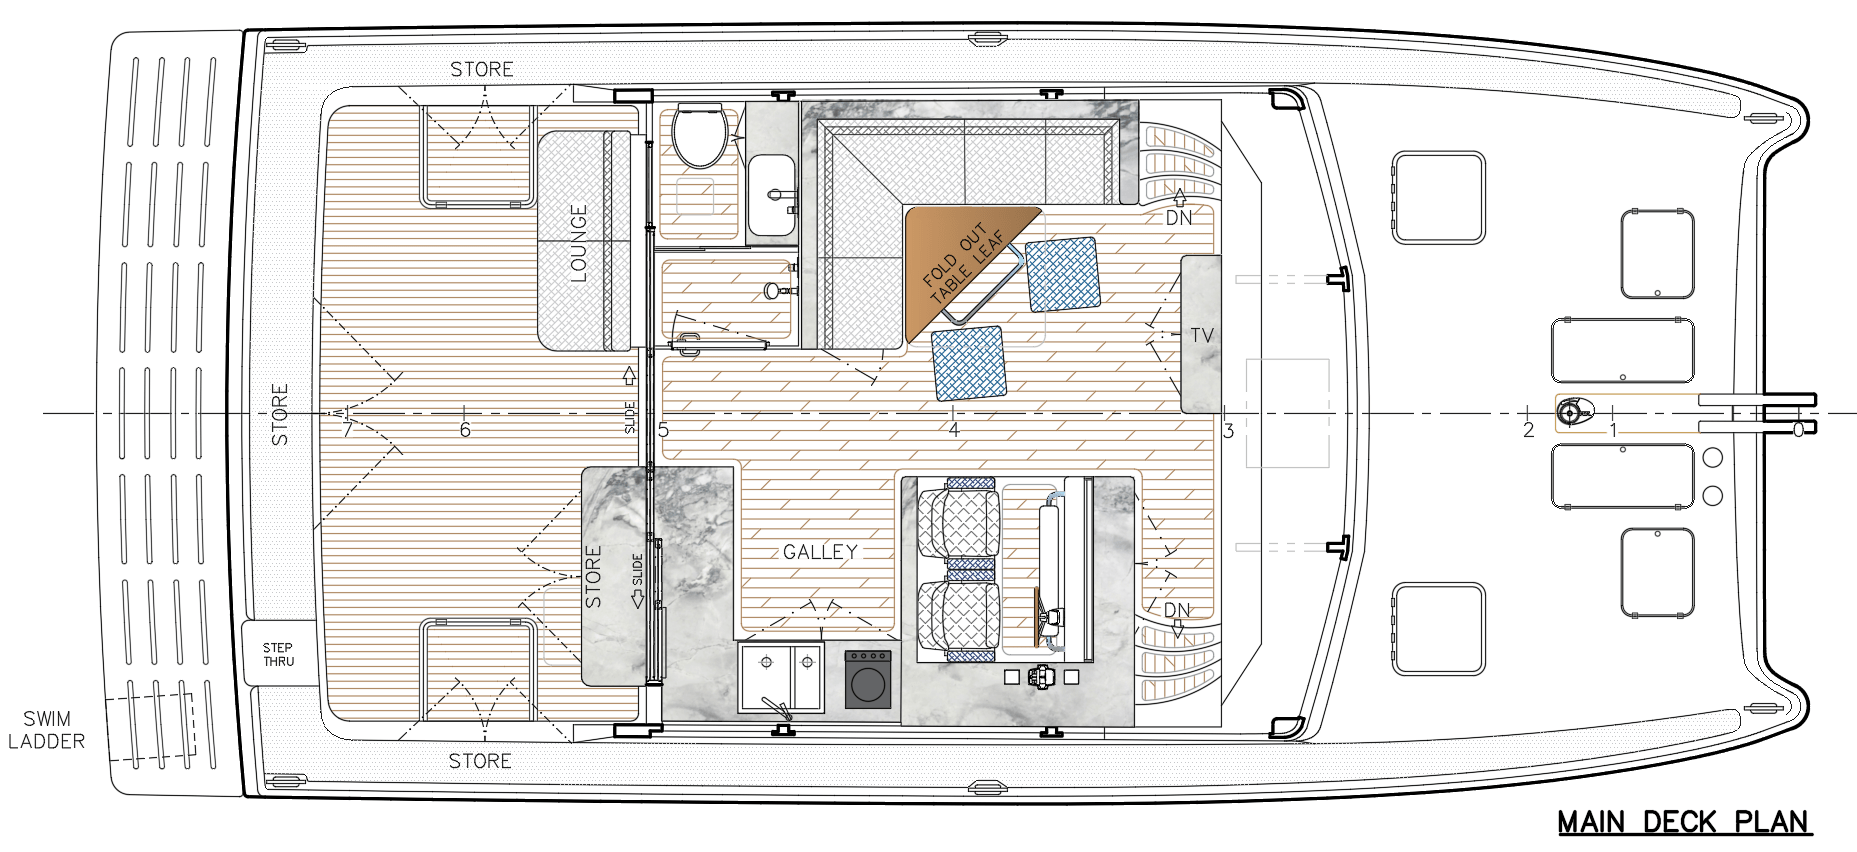 sedan-main-deck-layout.png